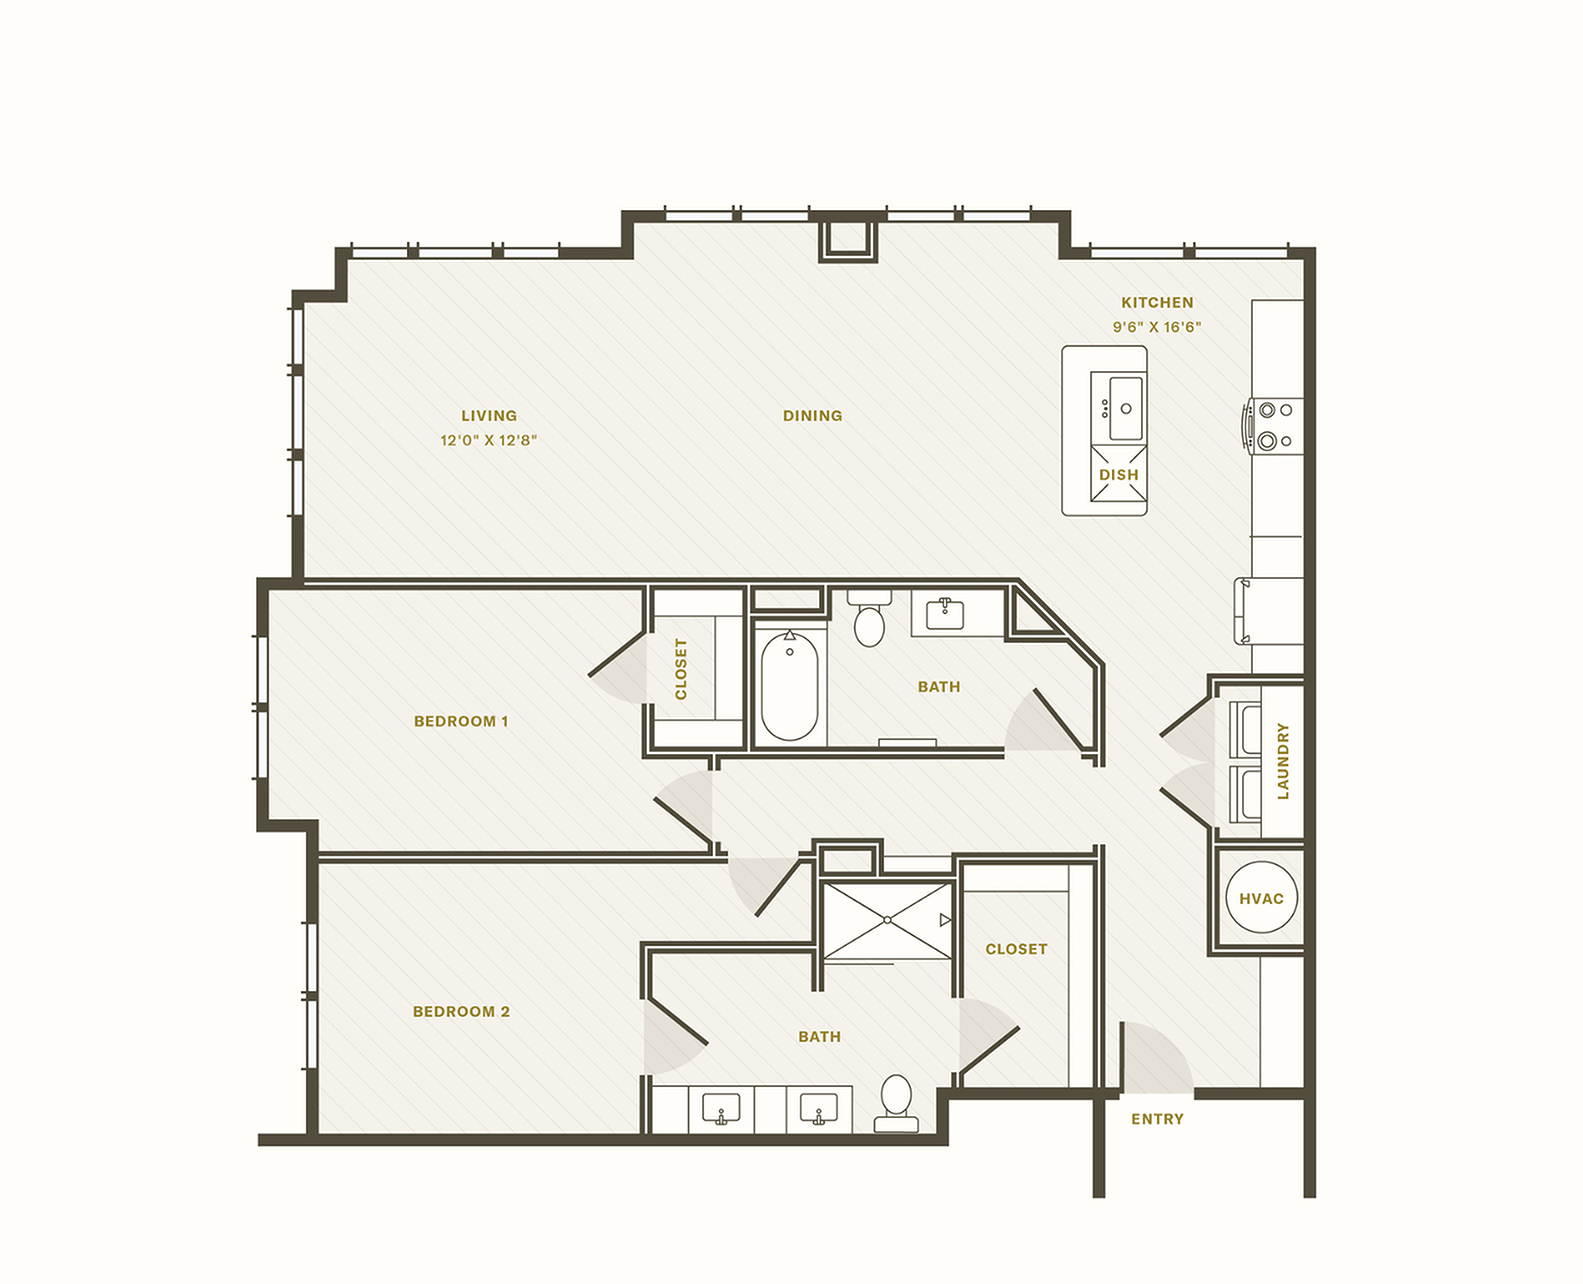 The Renaissance floor plan